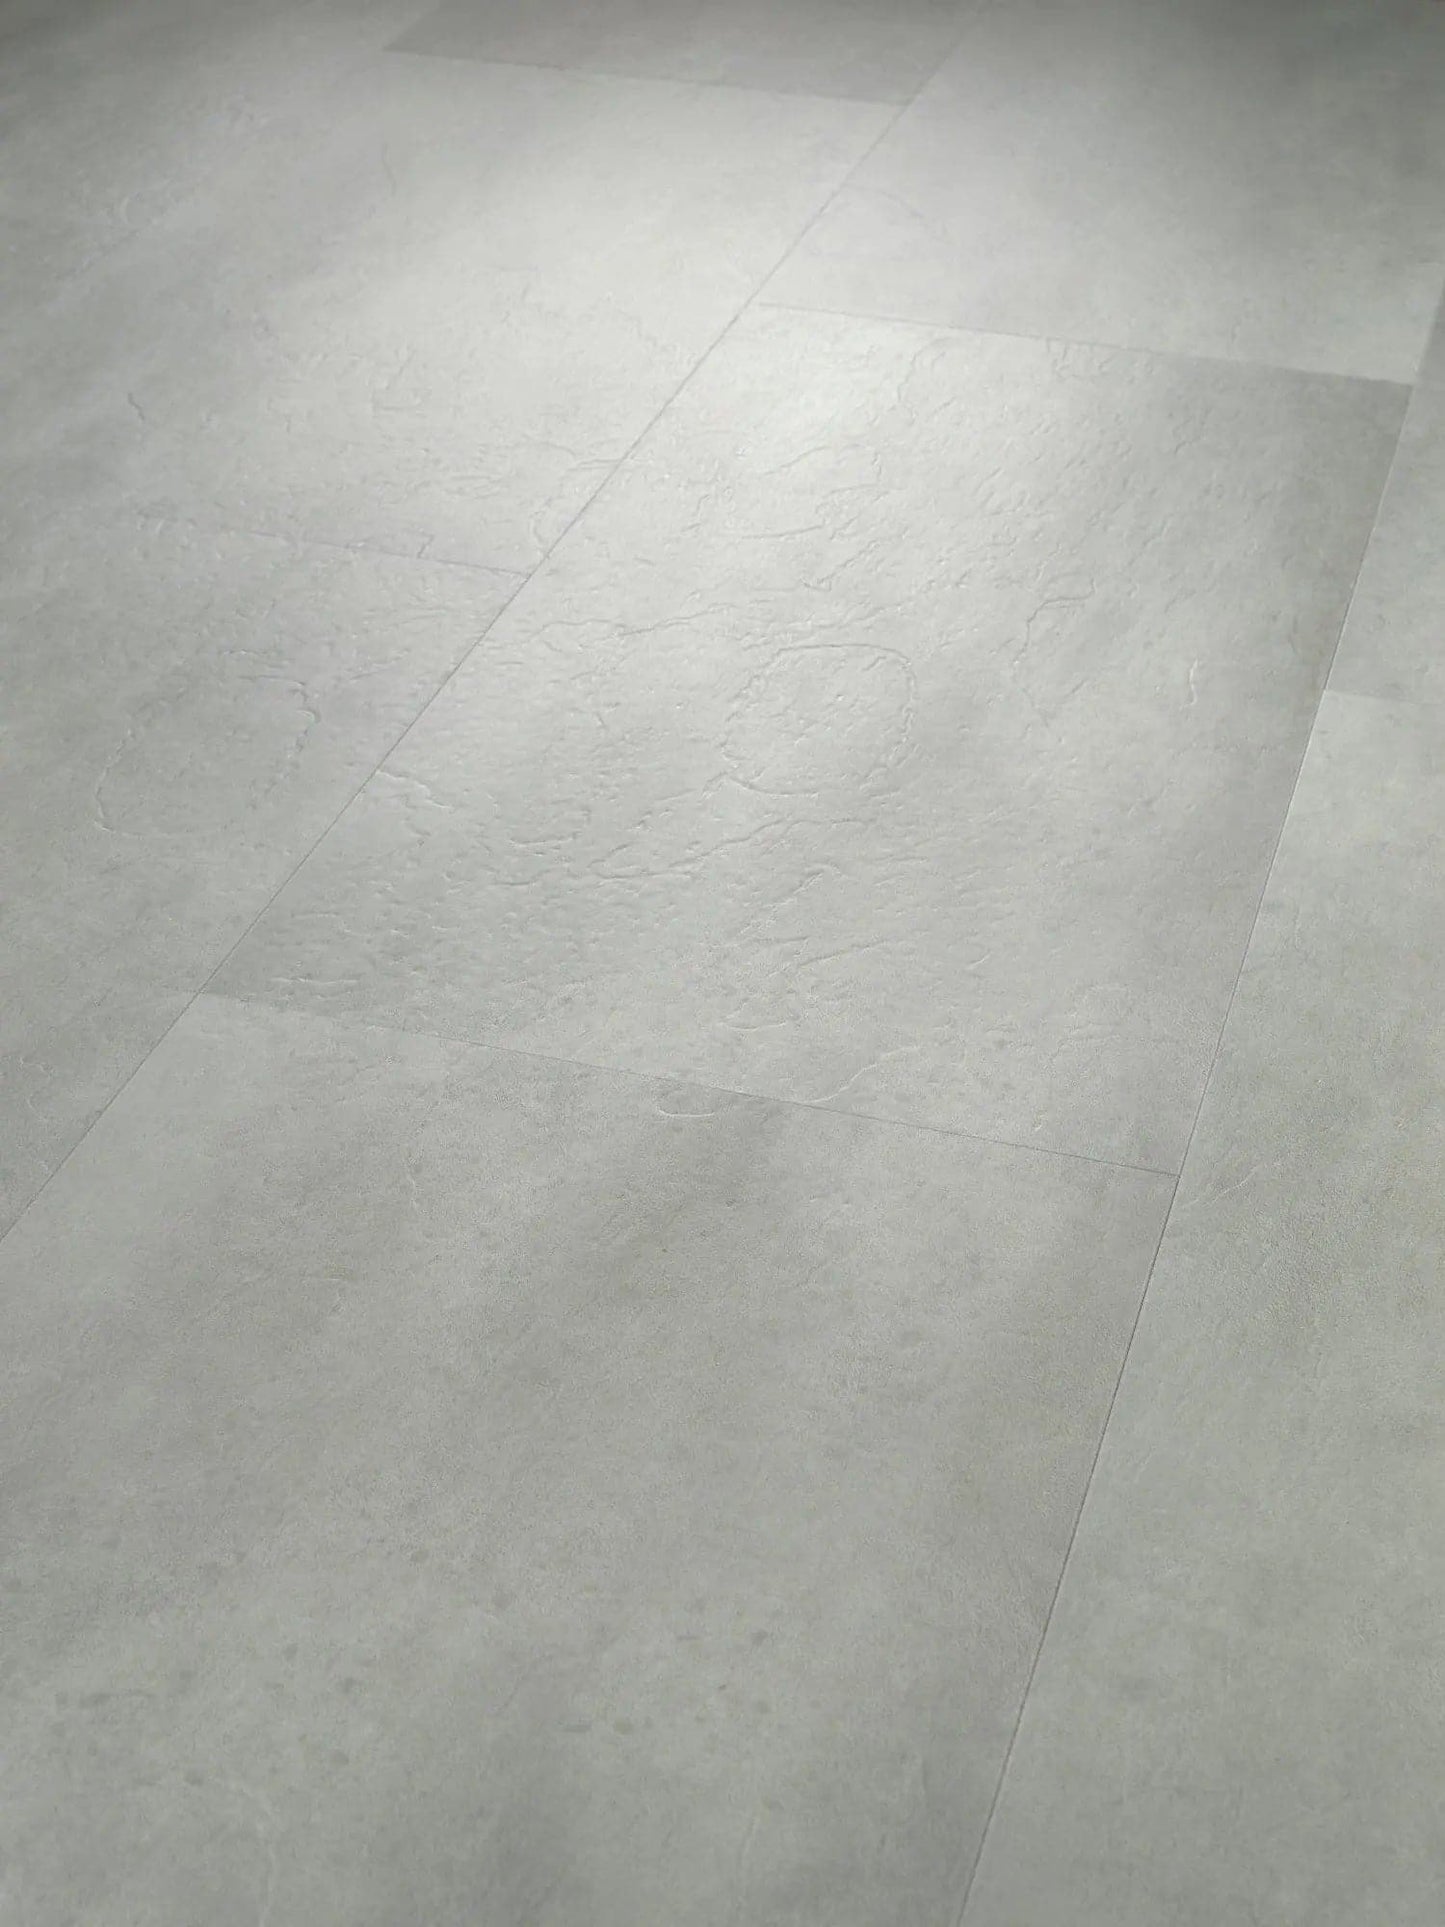 SUPERCore Concrete Waterproof Rigid Tile Flooring supercorefloors